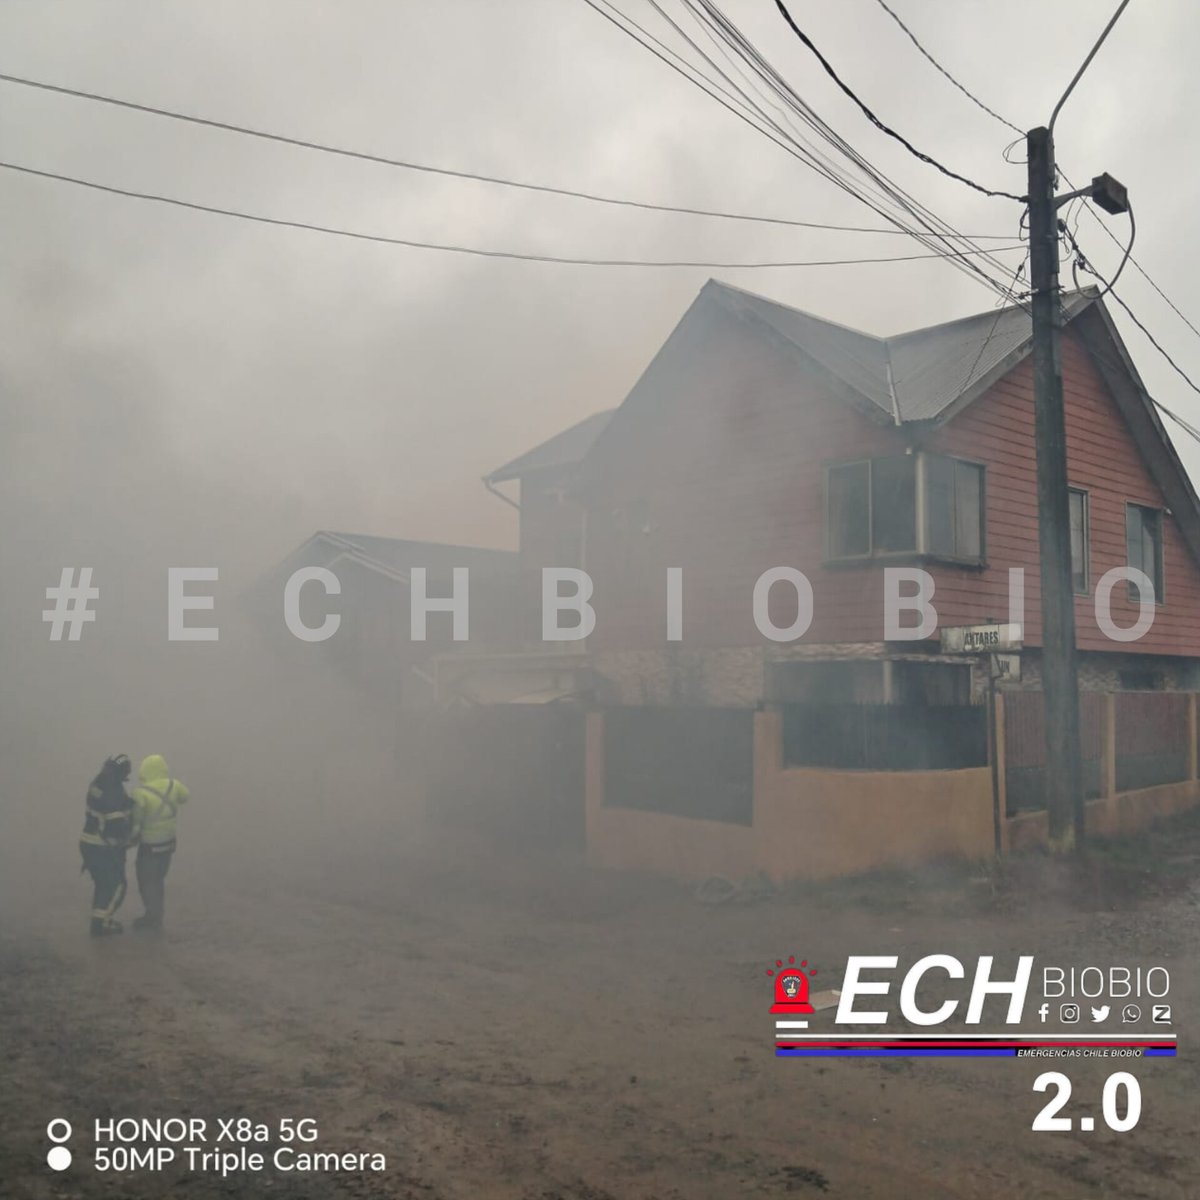 ECHBiobio tweet picture